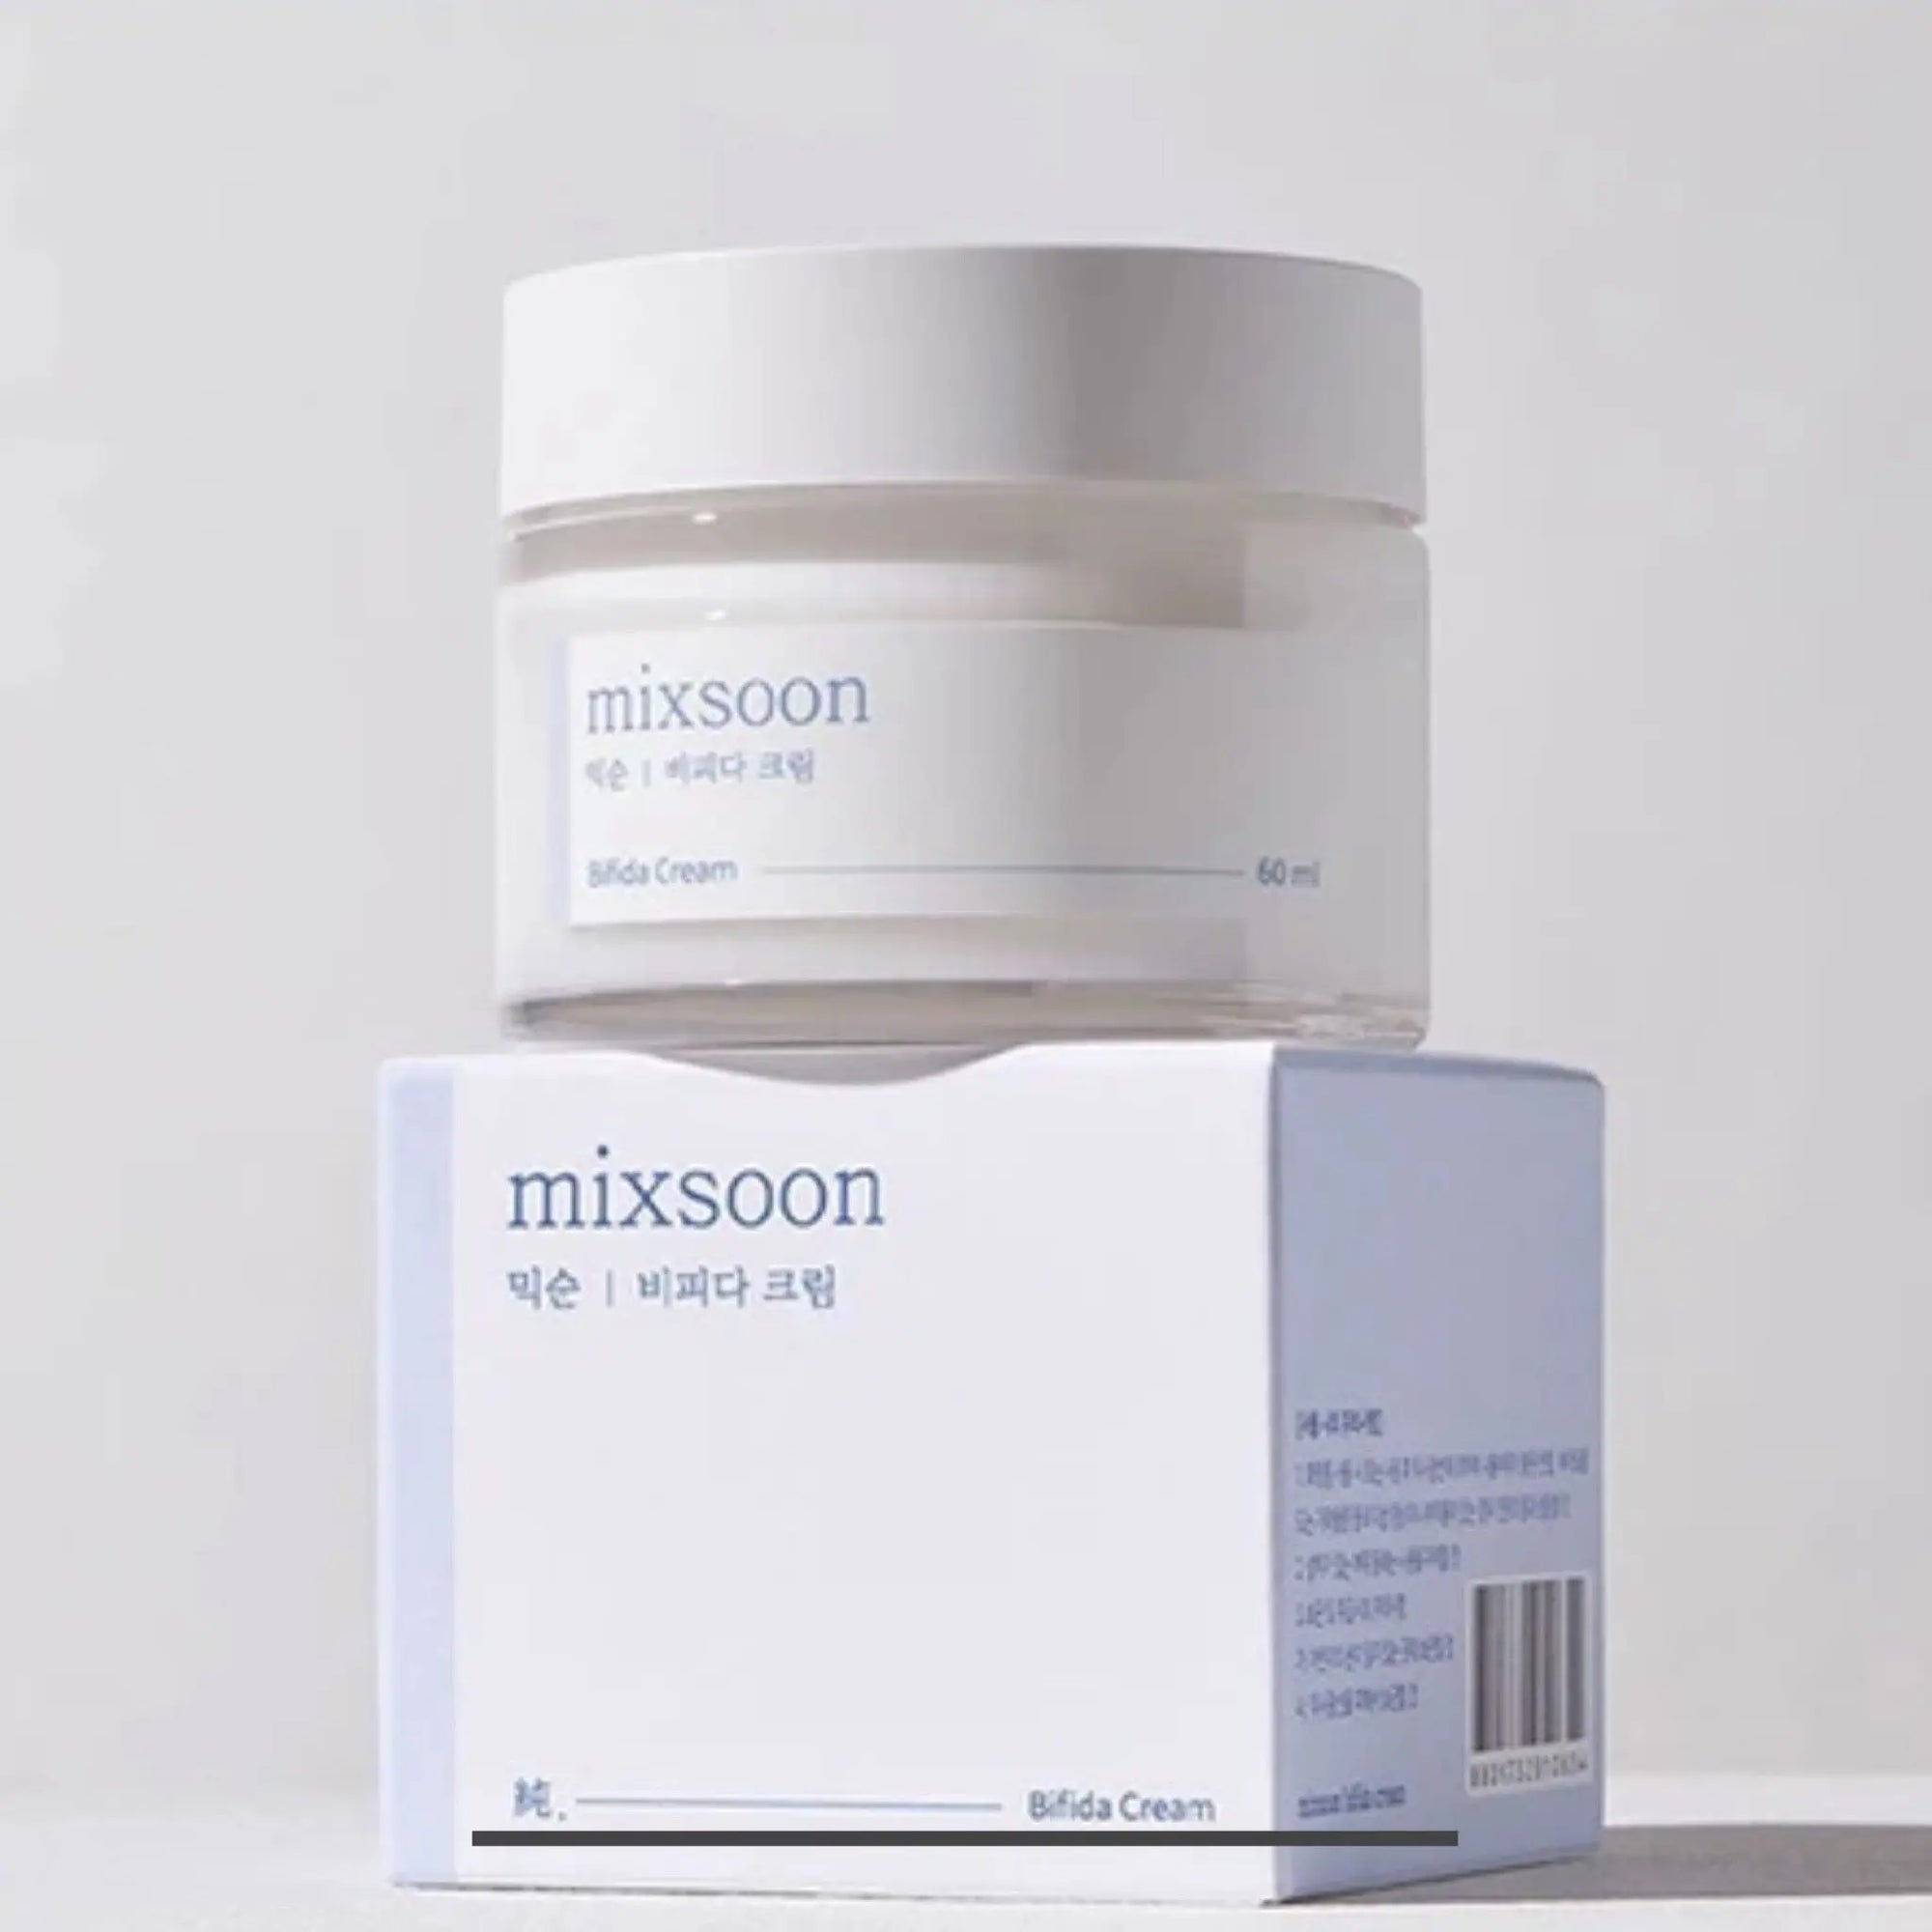 Mixsoon - Bifida Cream 60mL Mixsoon